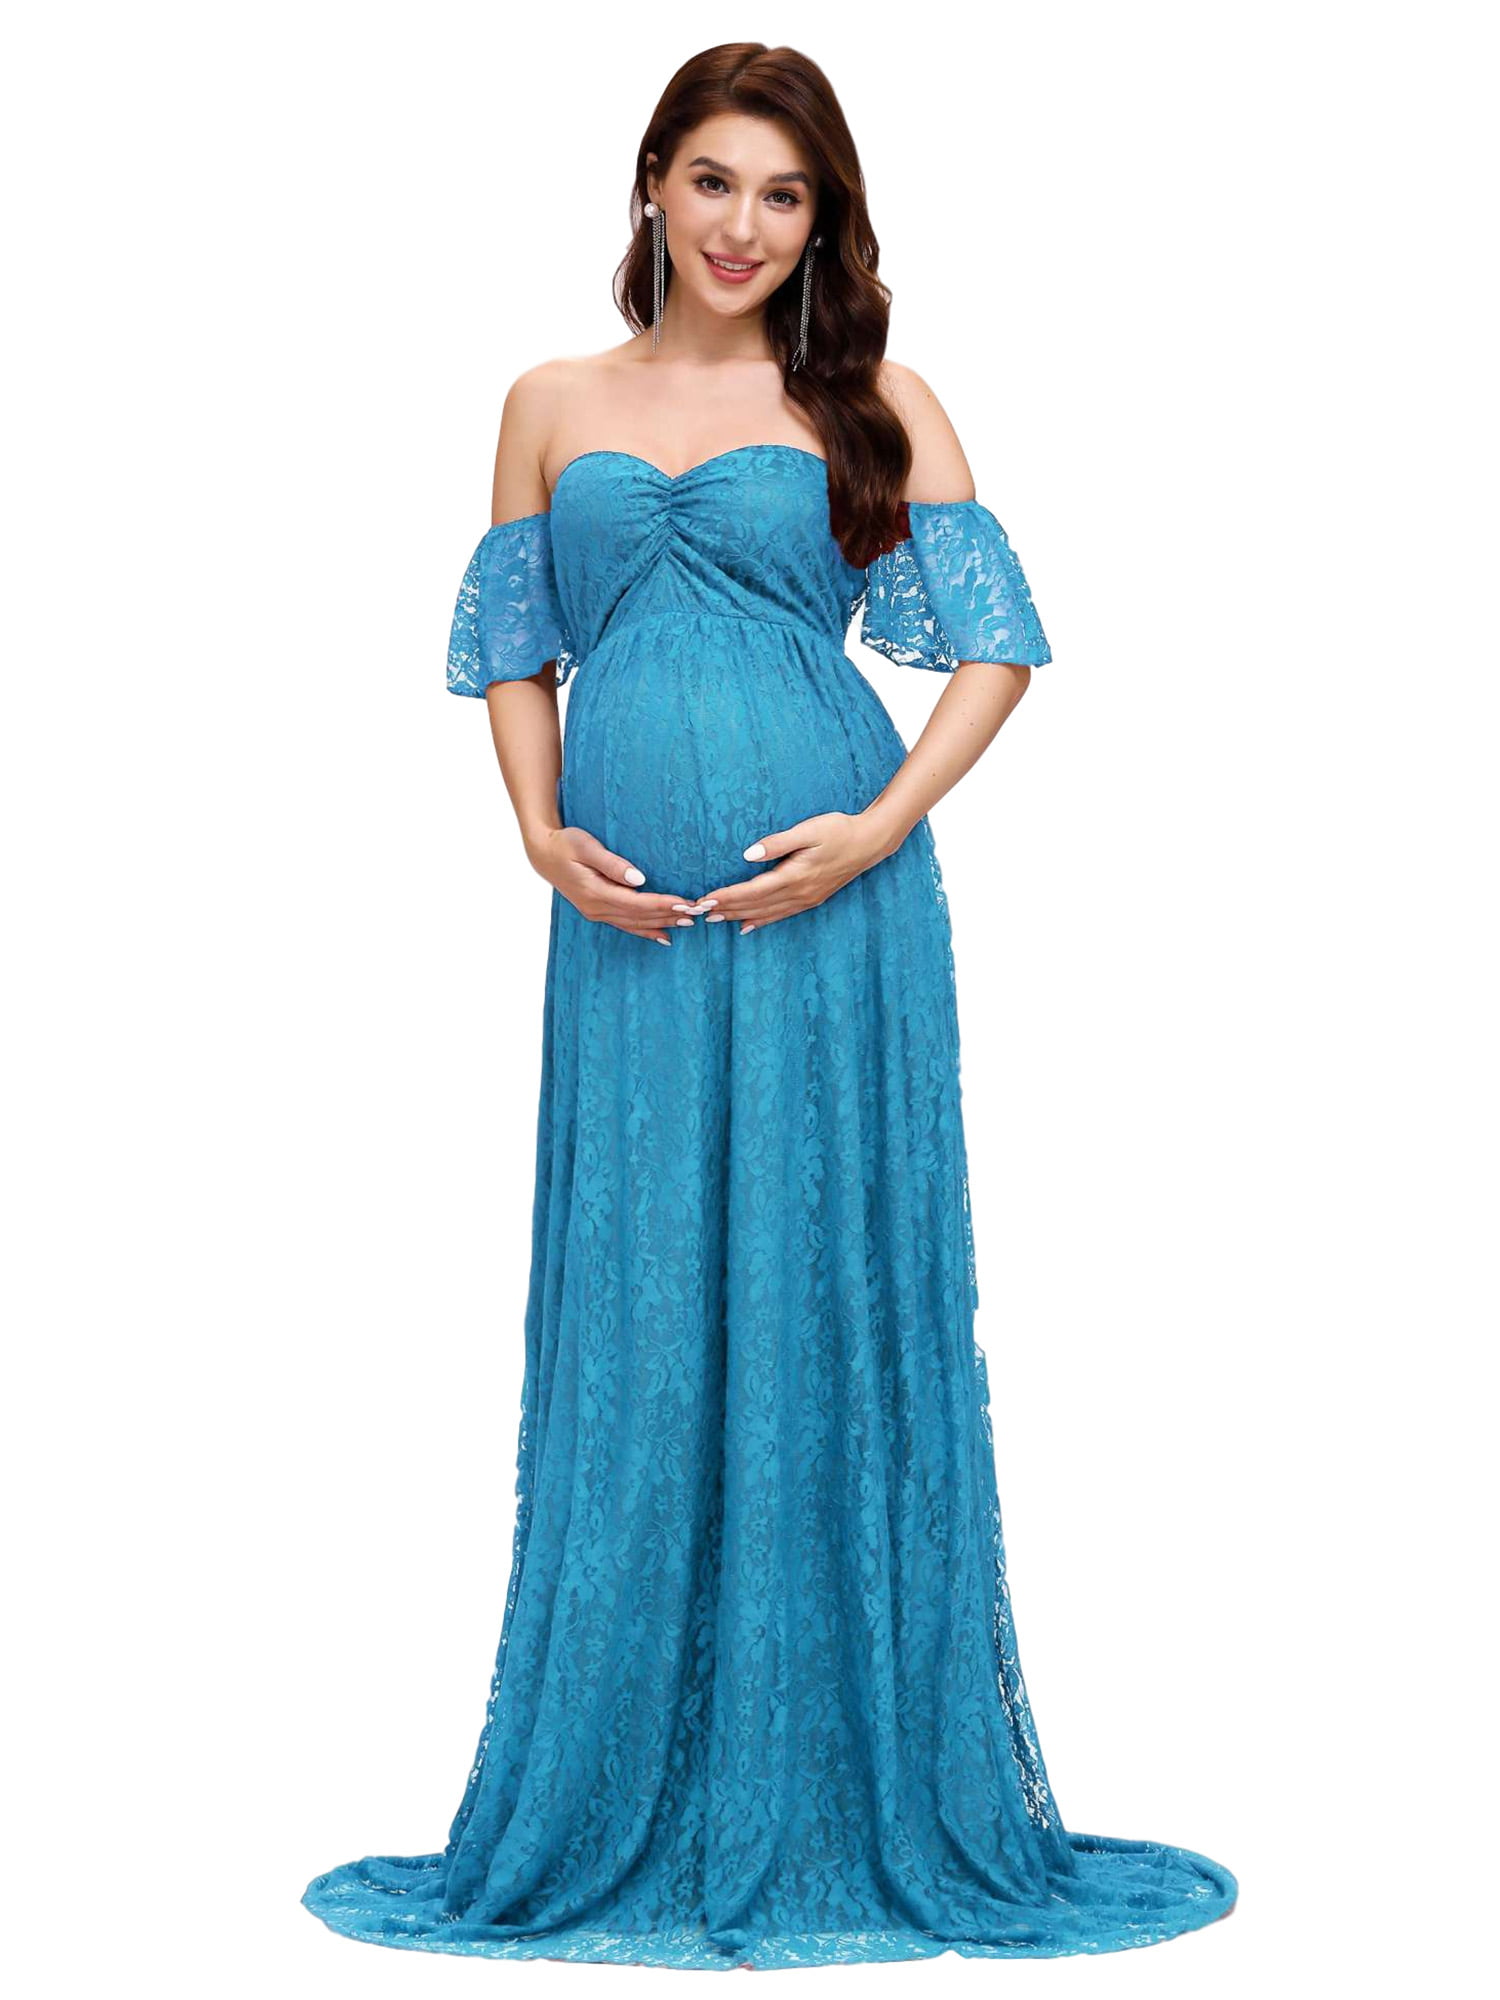 Selfieee - Selfieee Women's Maternity Dress Fitted Off Shoulder Baby ...